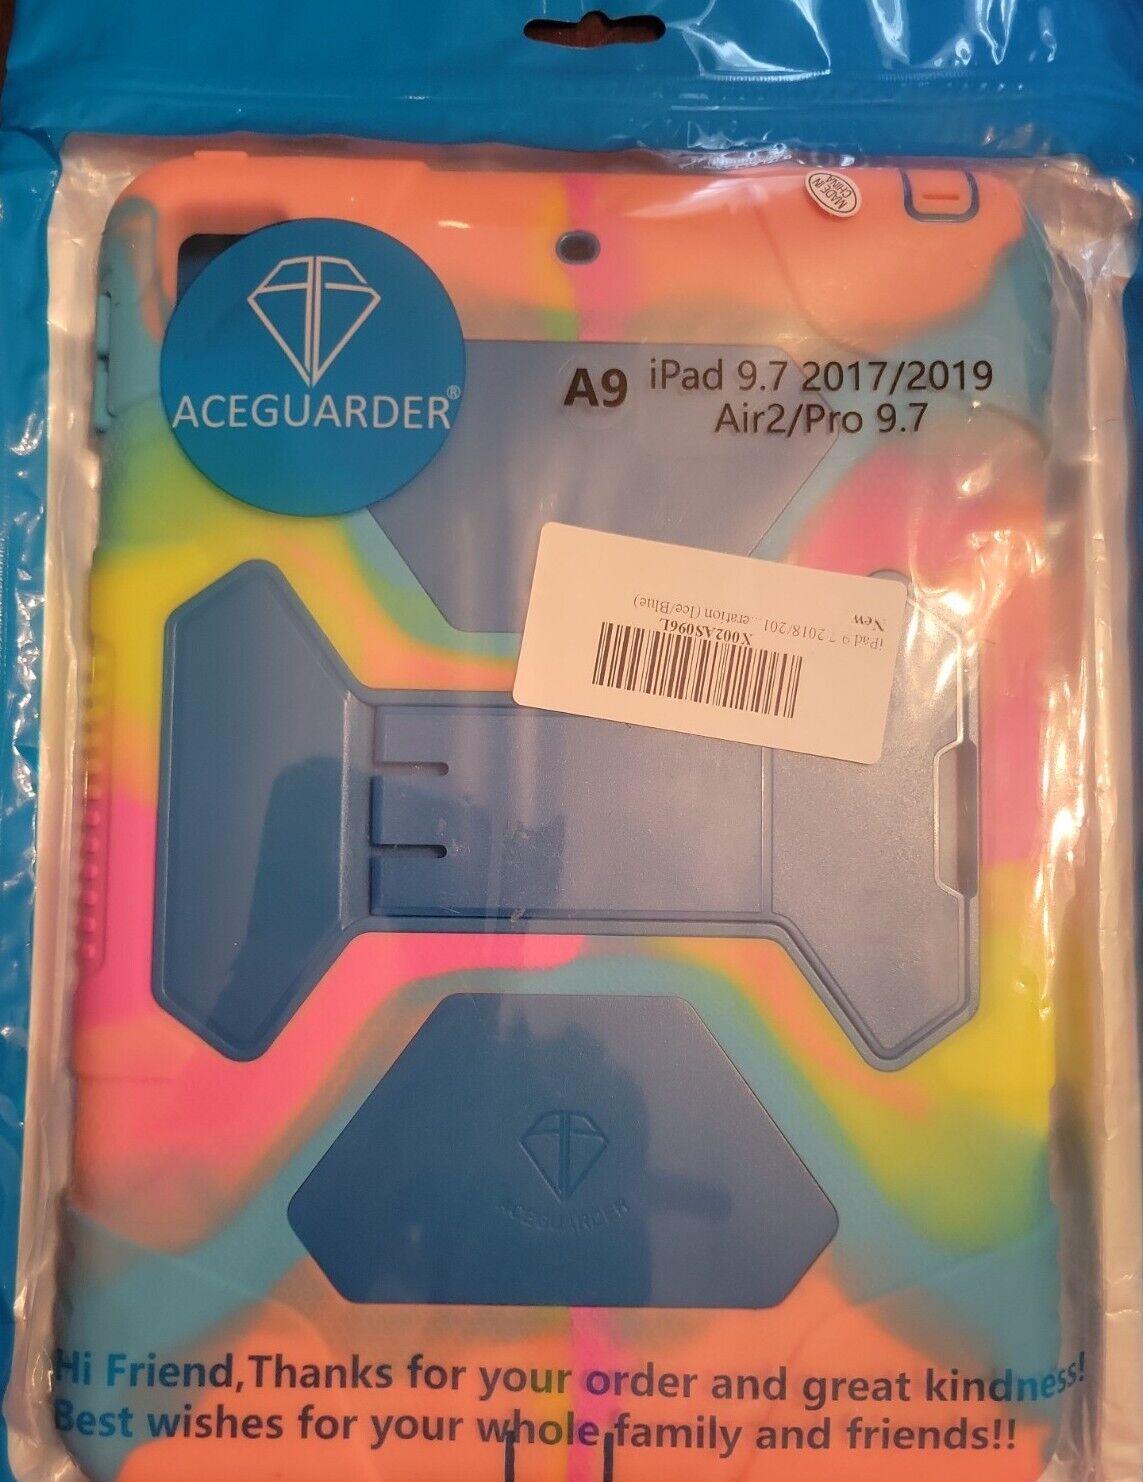 Aceguarder Ipad Case Set Fits iPad 9.7 2017/2019 Air2/Pro 9.7. Sealed